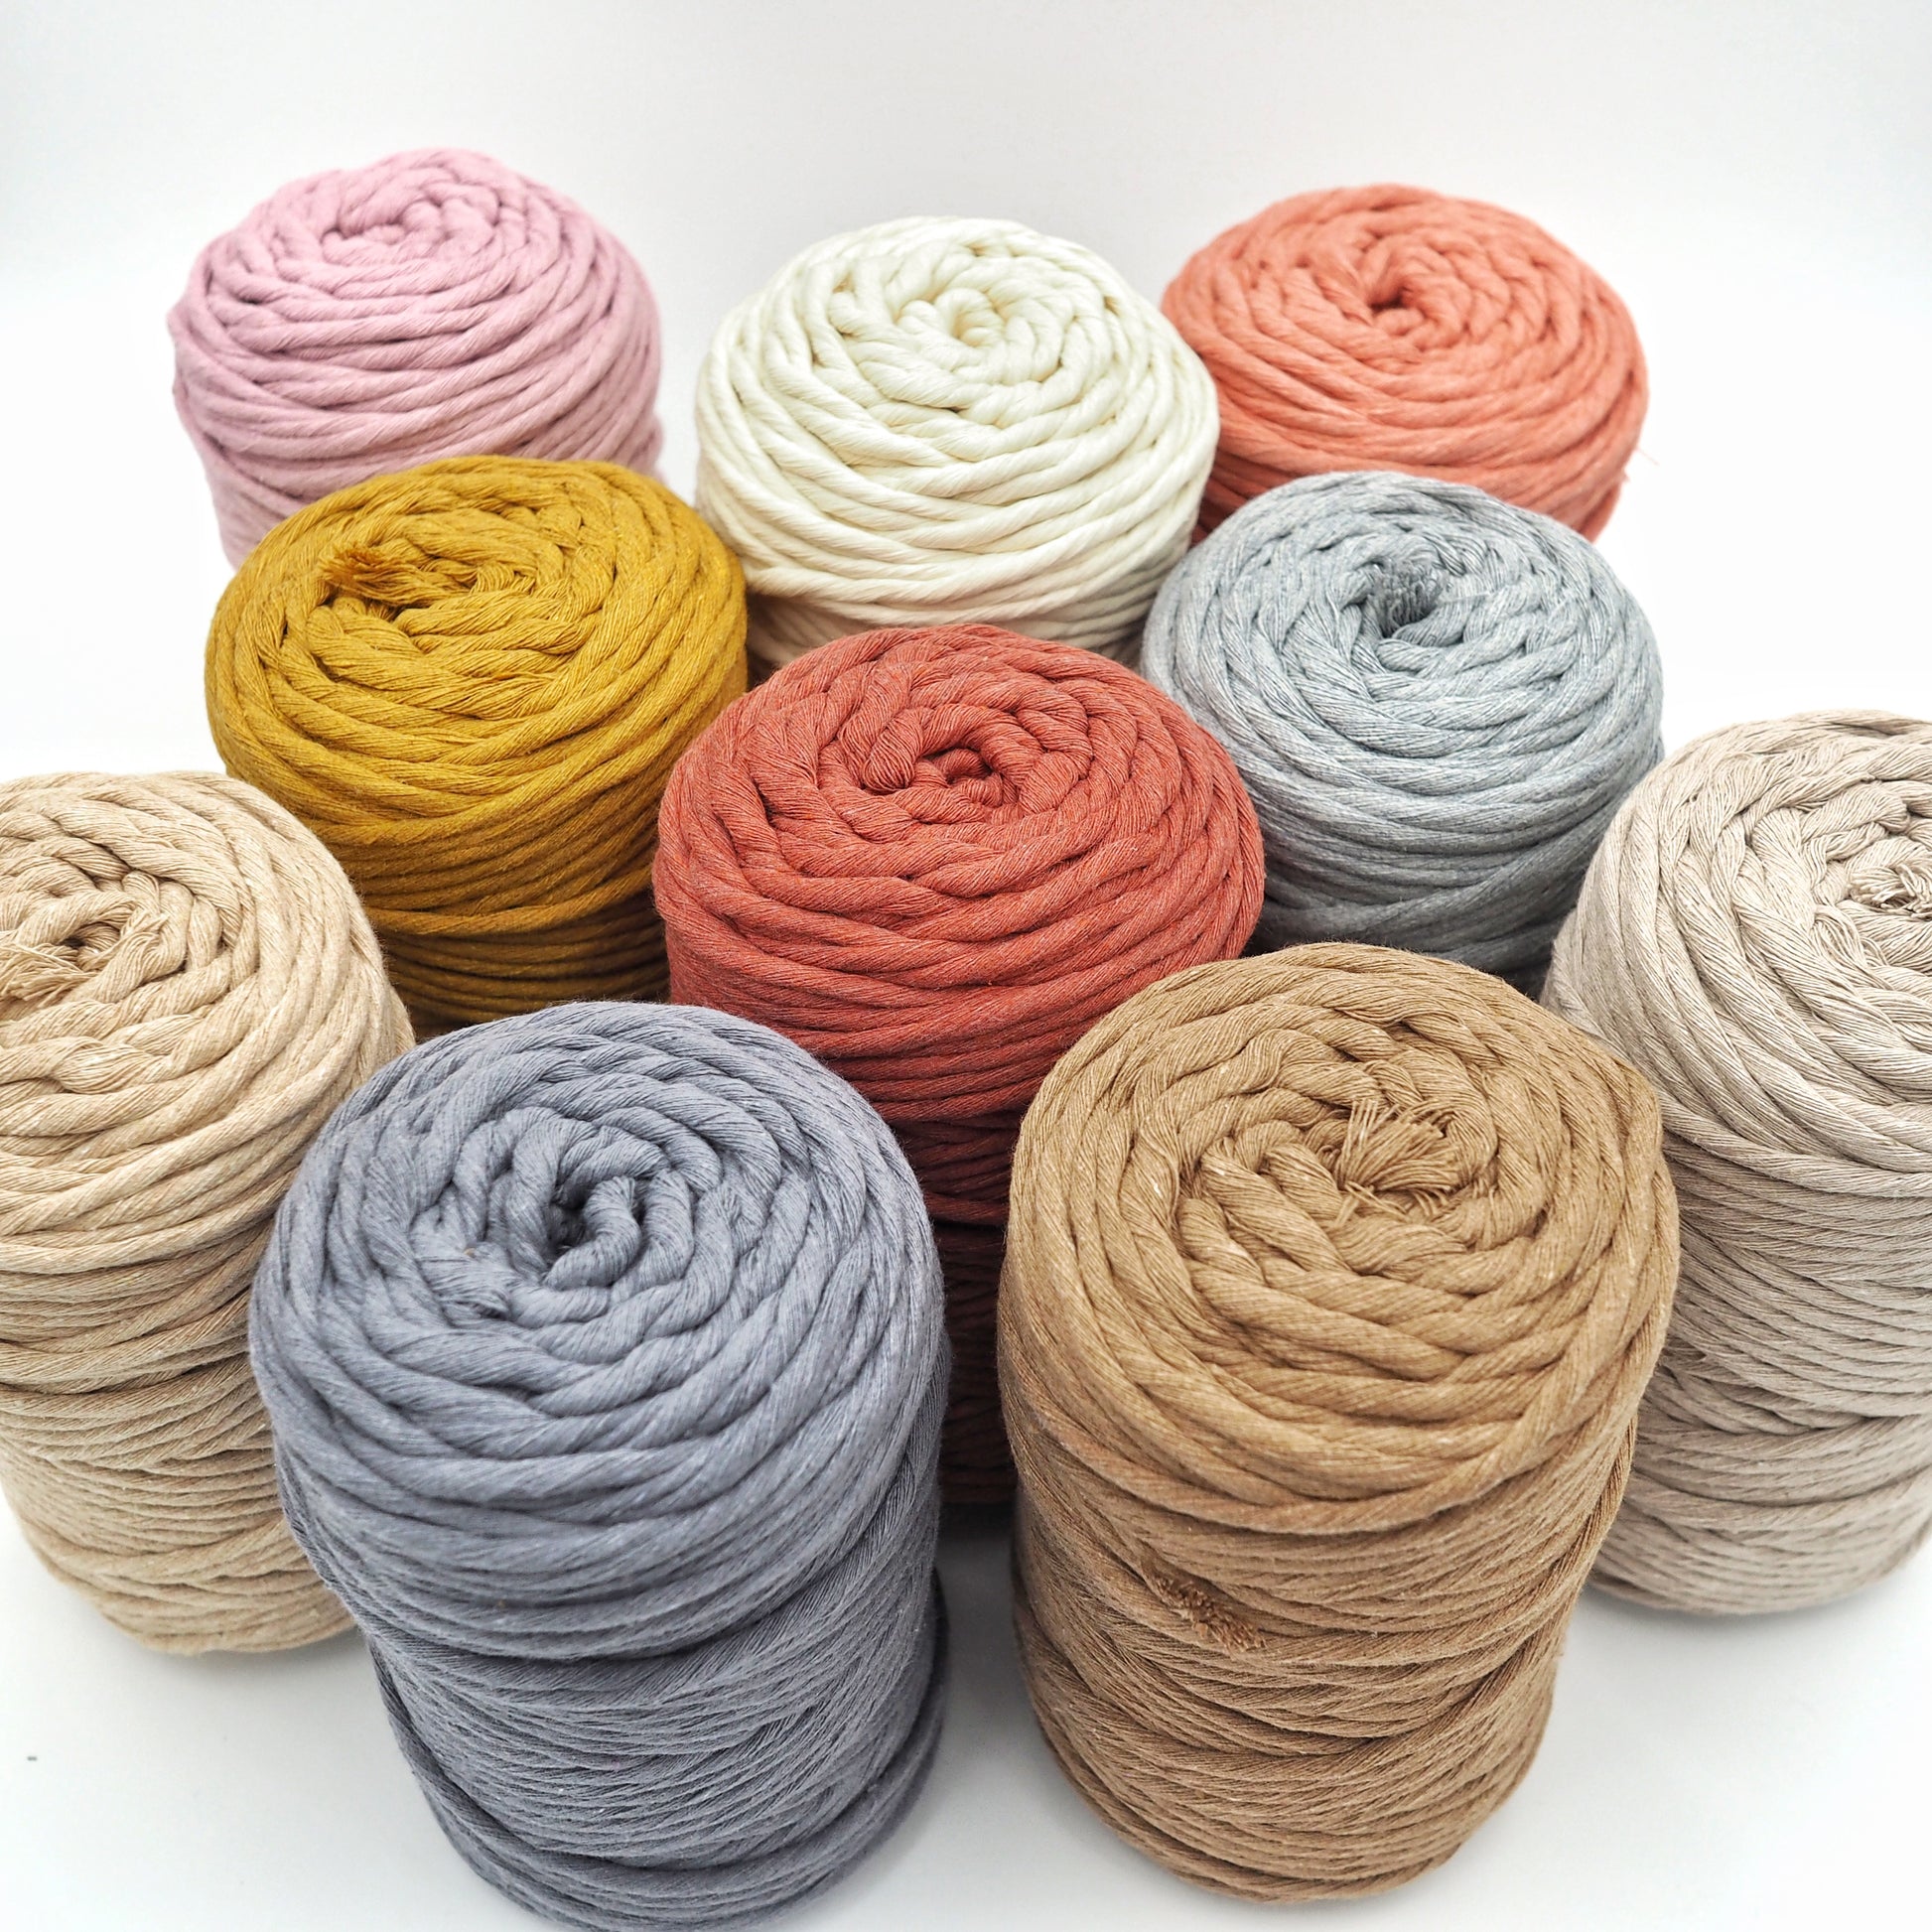 Dusty Rose | 5mm Recycled Cotton String The Joyful Studio